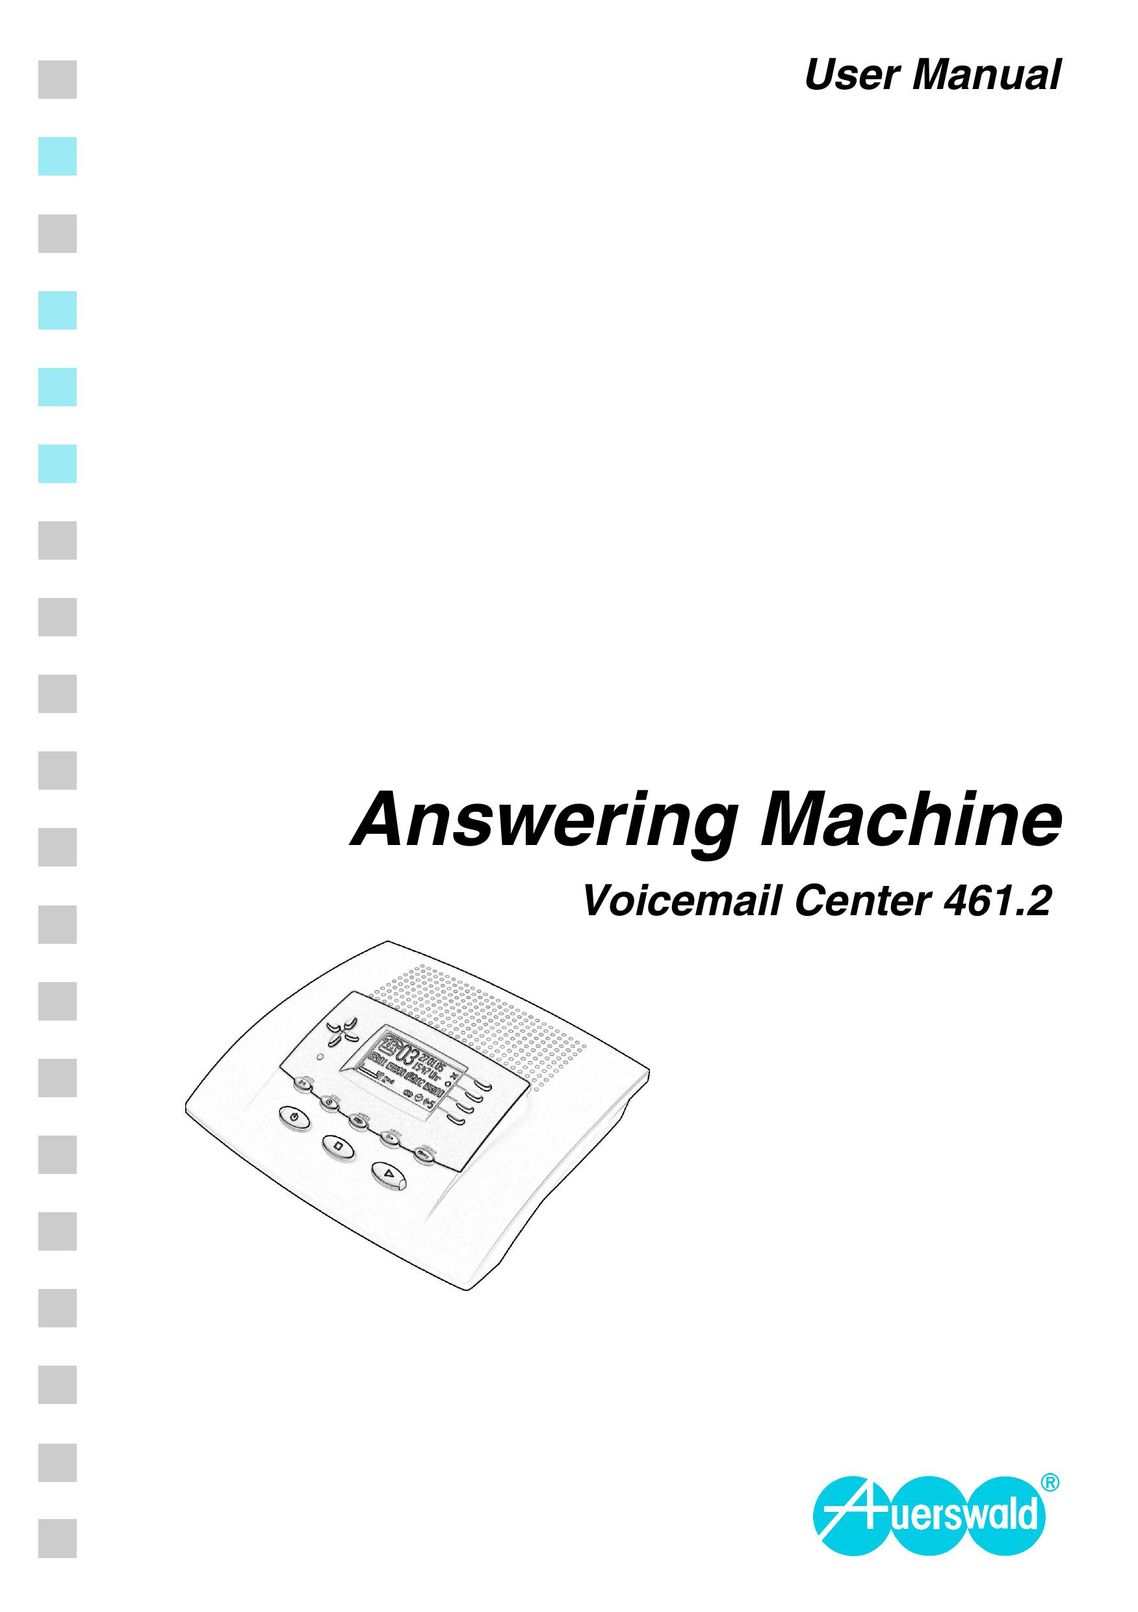 Auerswald 461.2 Answering Machine User Manual